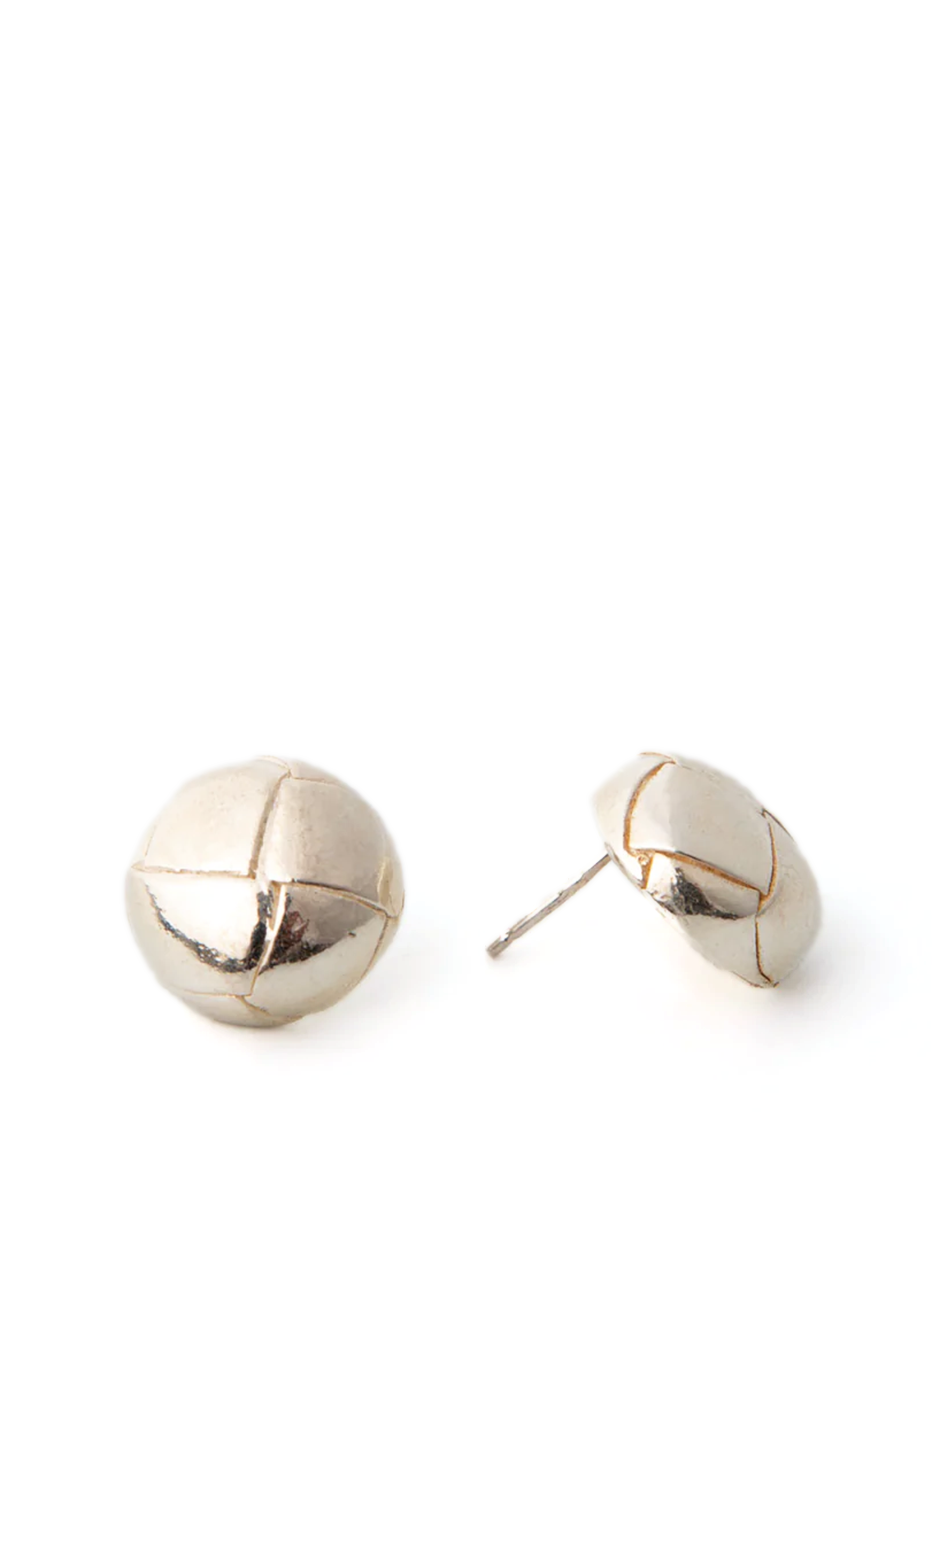 mirror ball earrings joana mota capitao